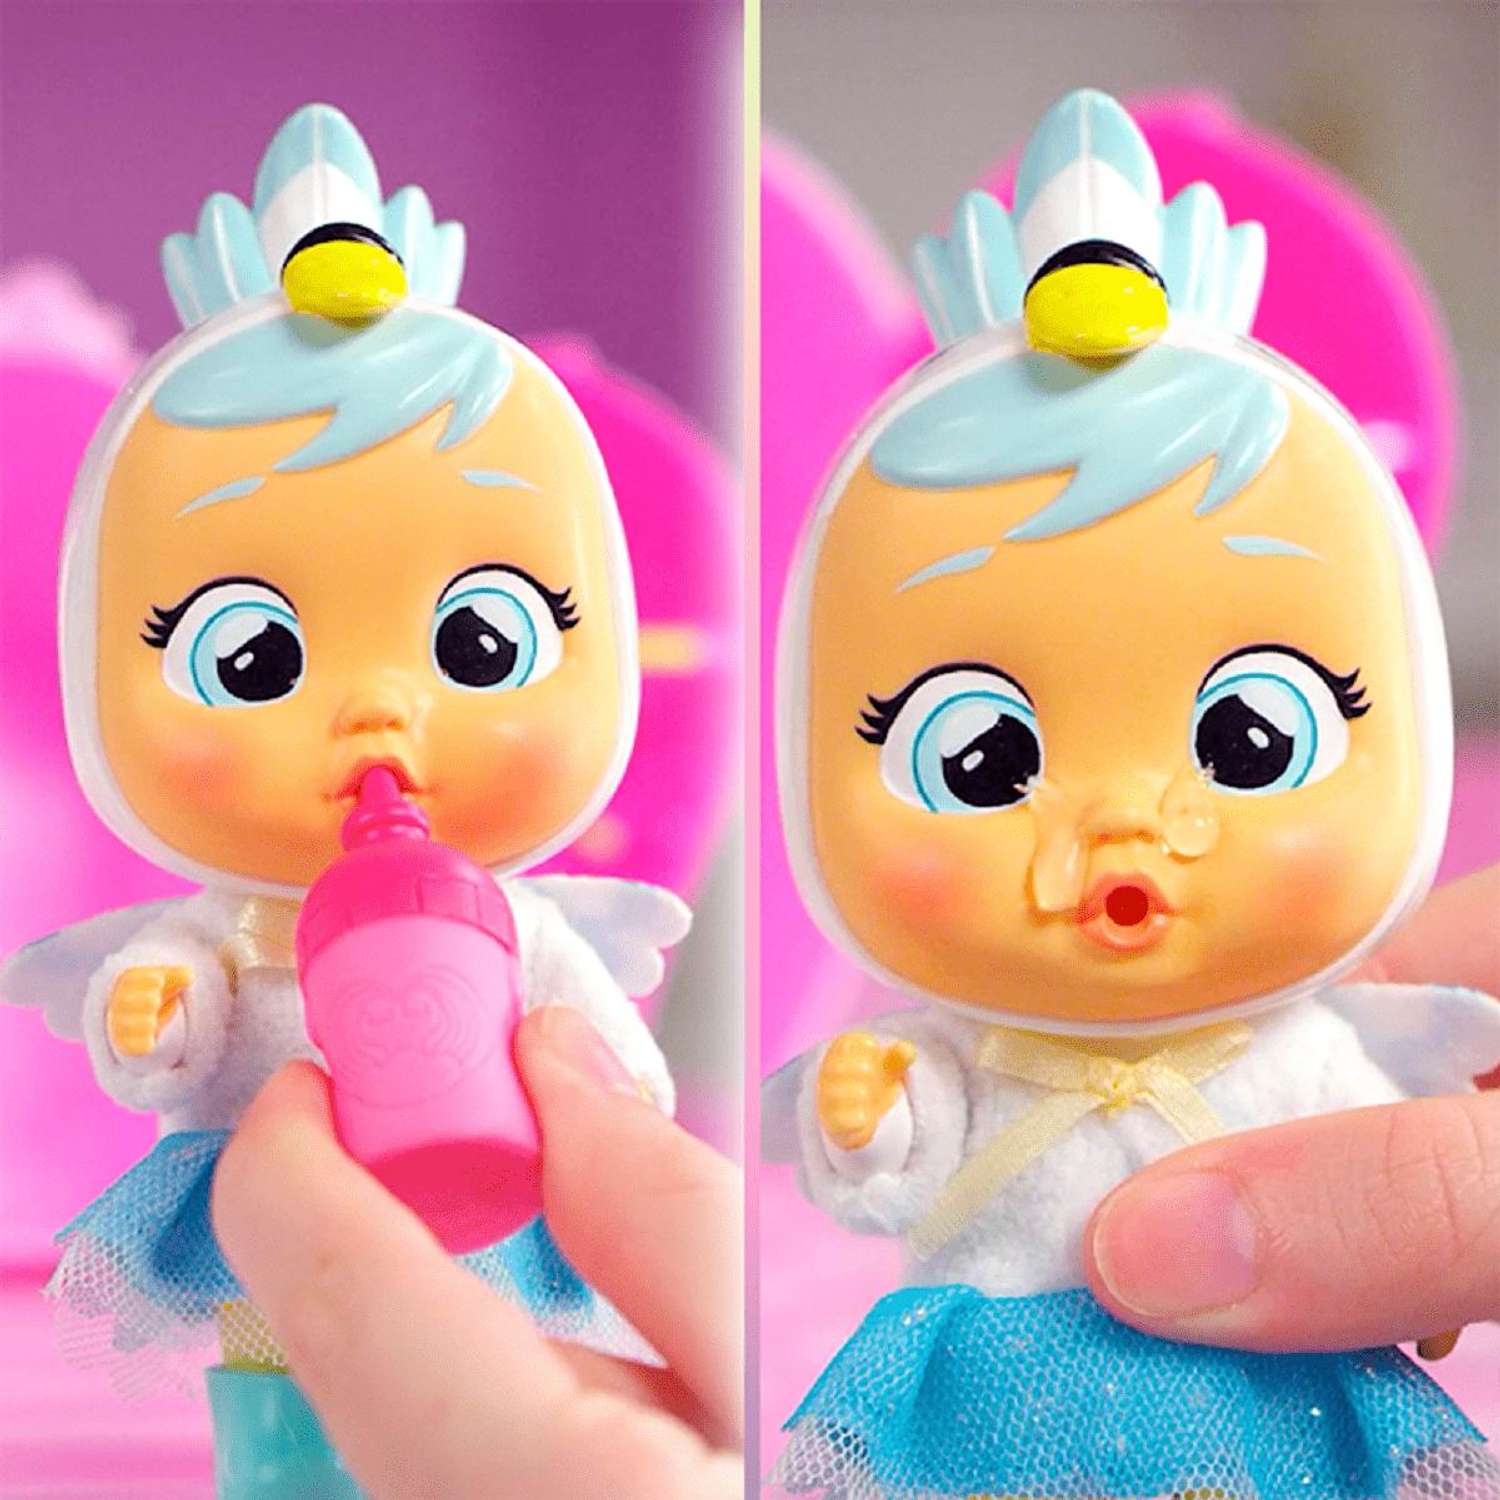 Кукла Cry Babies Magic Tears IMC Toys Плачущий младенец серия DRESS ME UP в комплекте с домиком и аксессуарами 81970 - фото 6